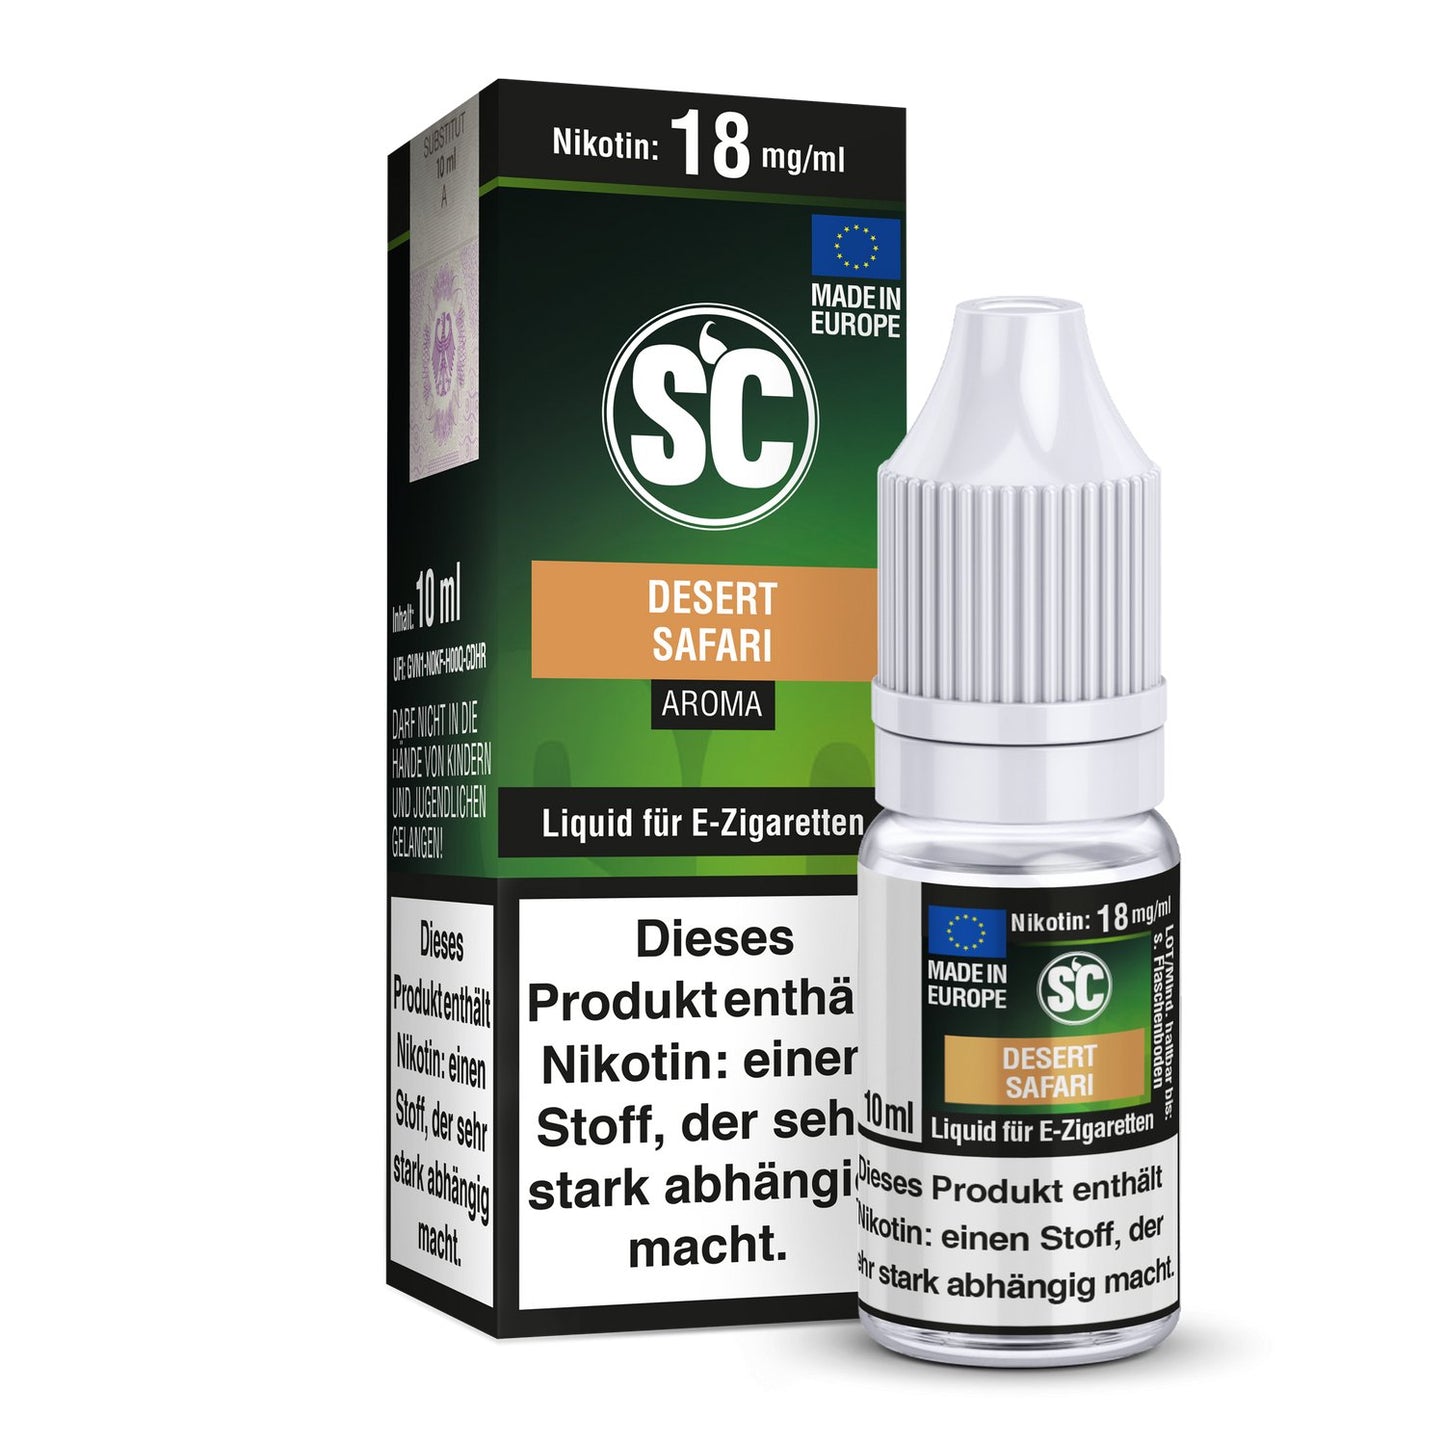 SC - Desert Safari Tabak - 10ml Fertigliquid (Nikotinfrei/Nikotin) - 1er Packung 3 mg/ml - Vapes4you